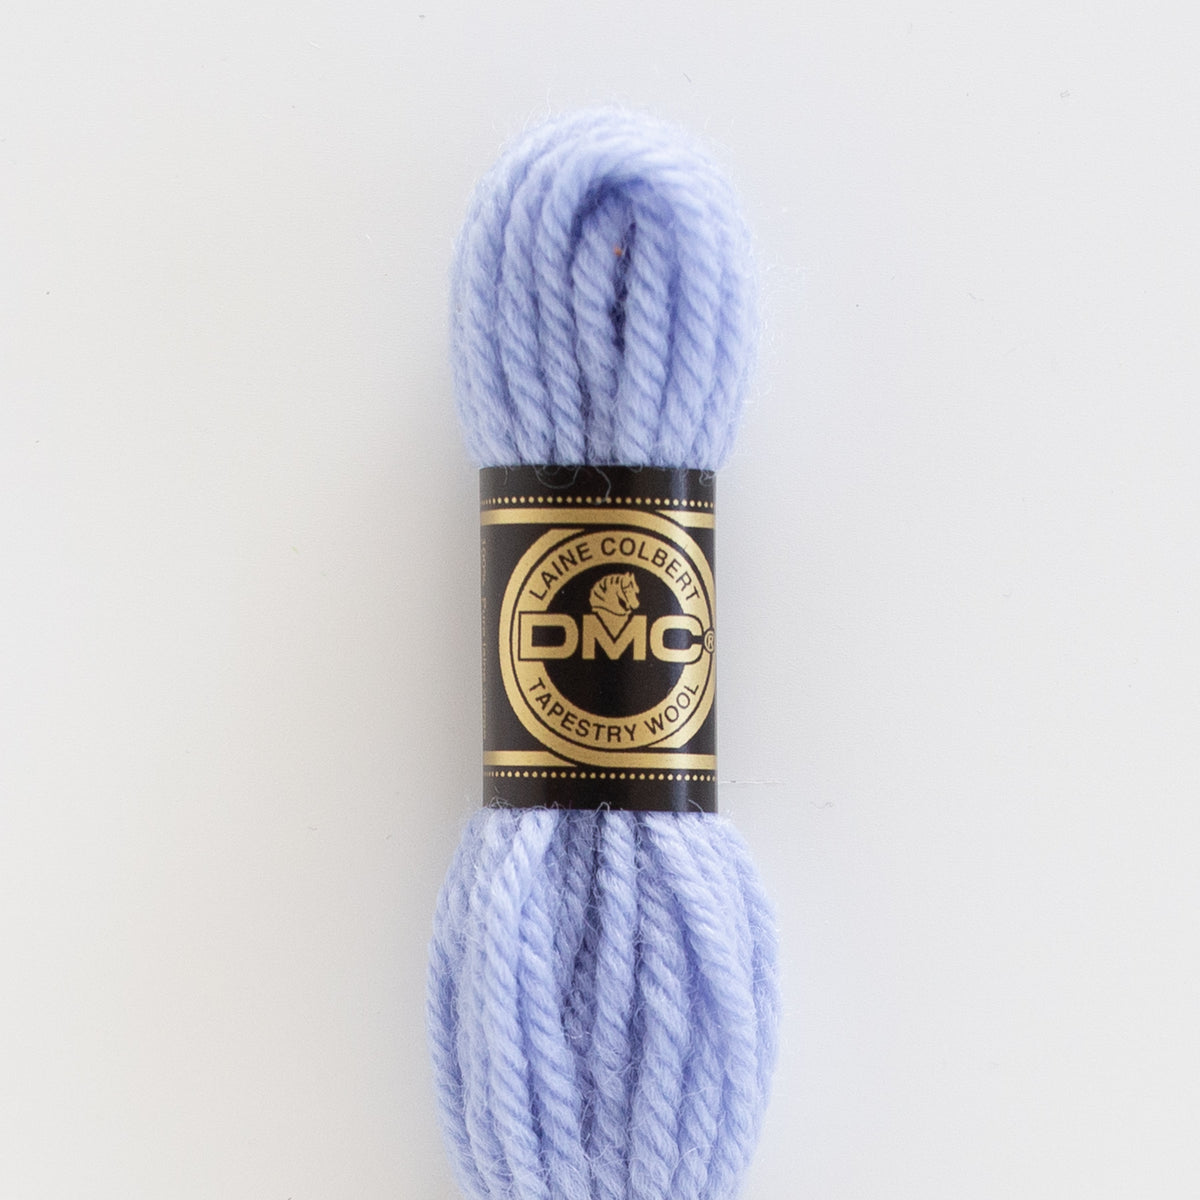 DMC Laine Colbert Tapestry wool 7018